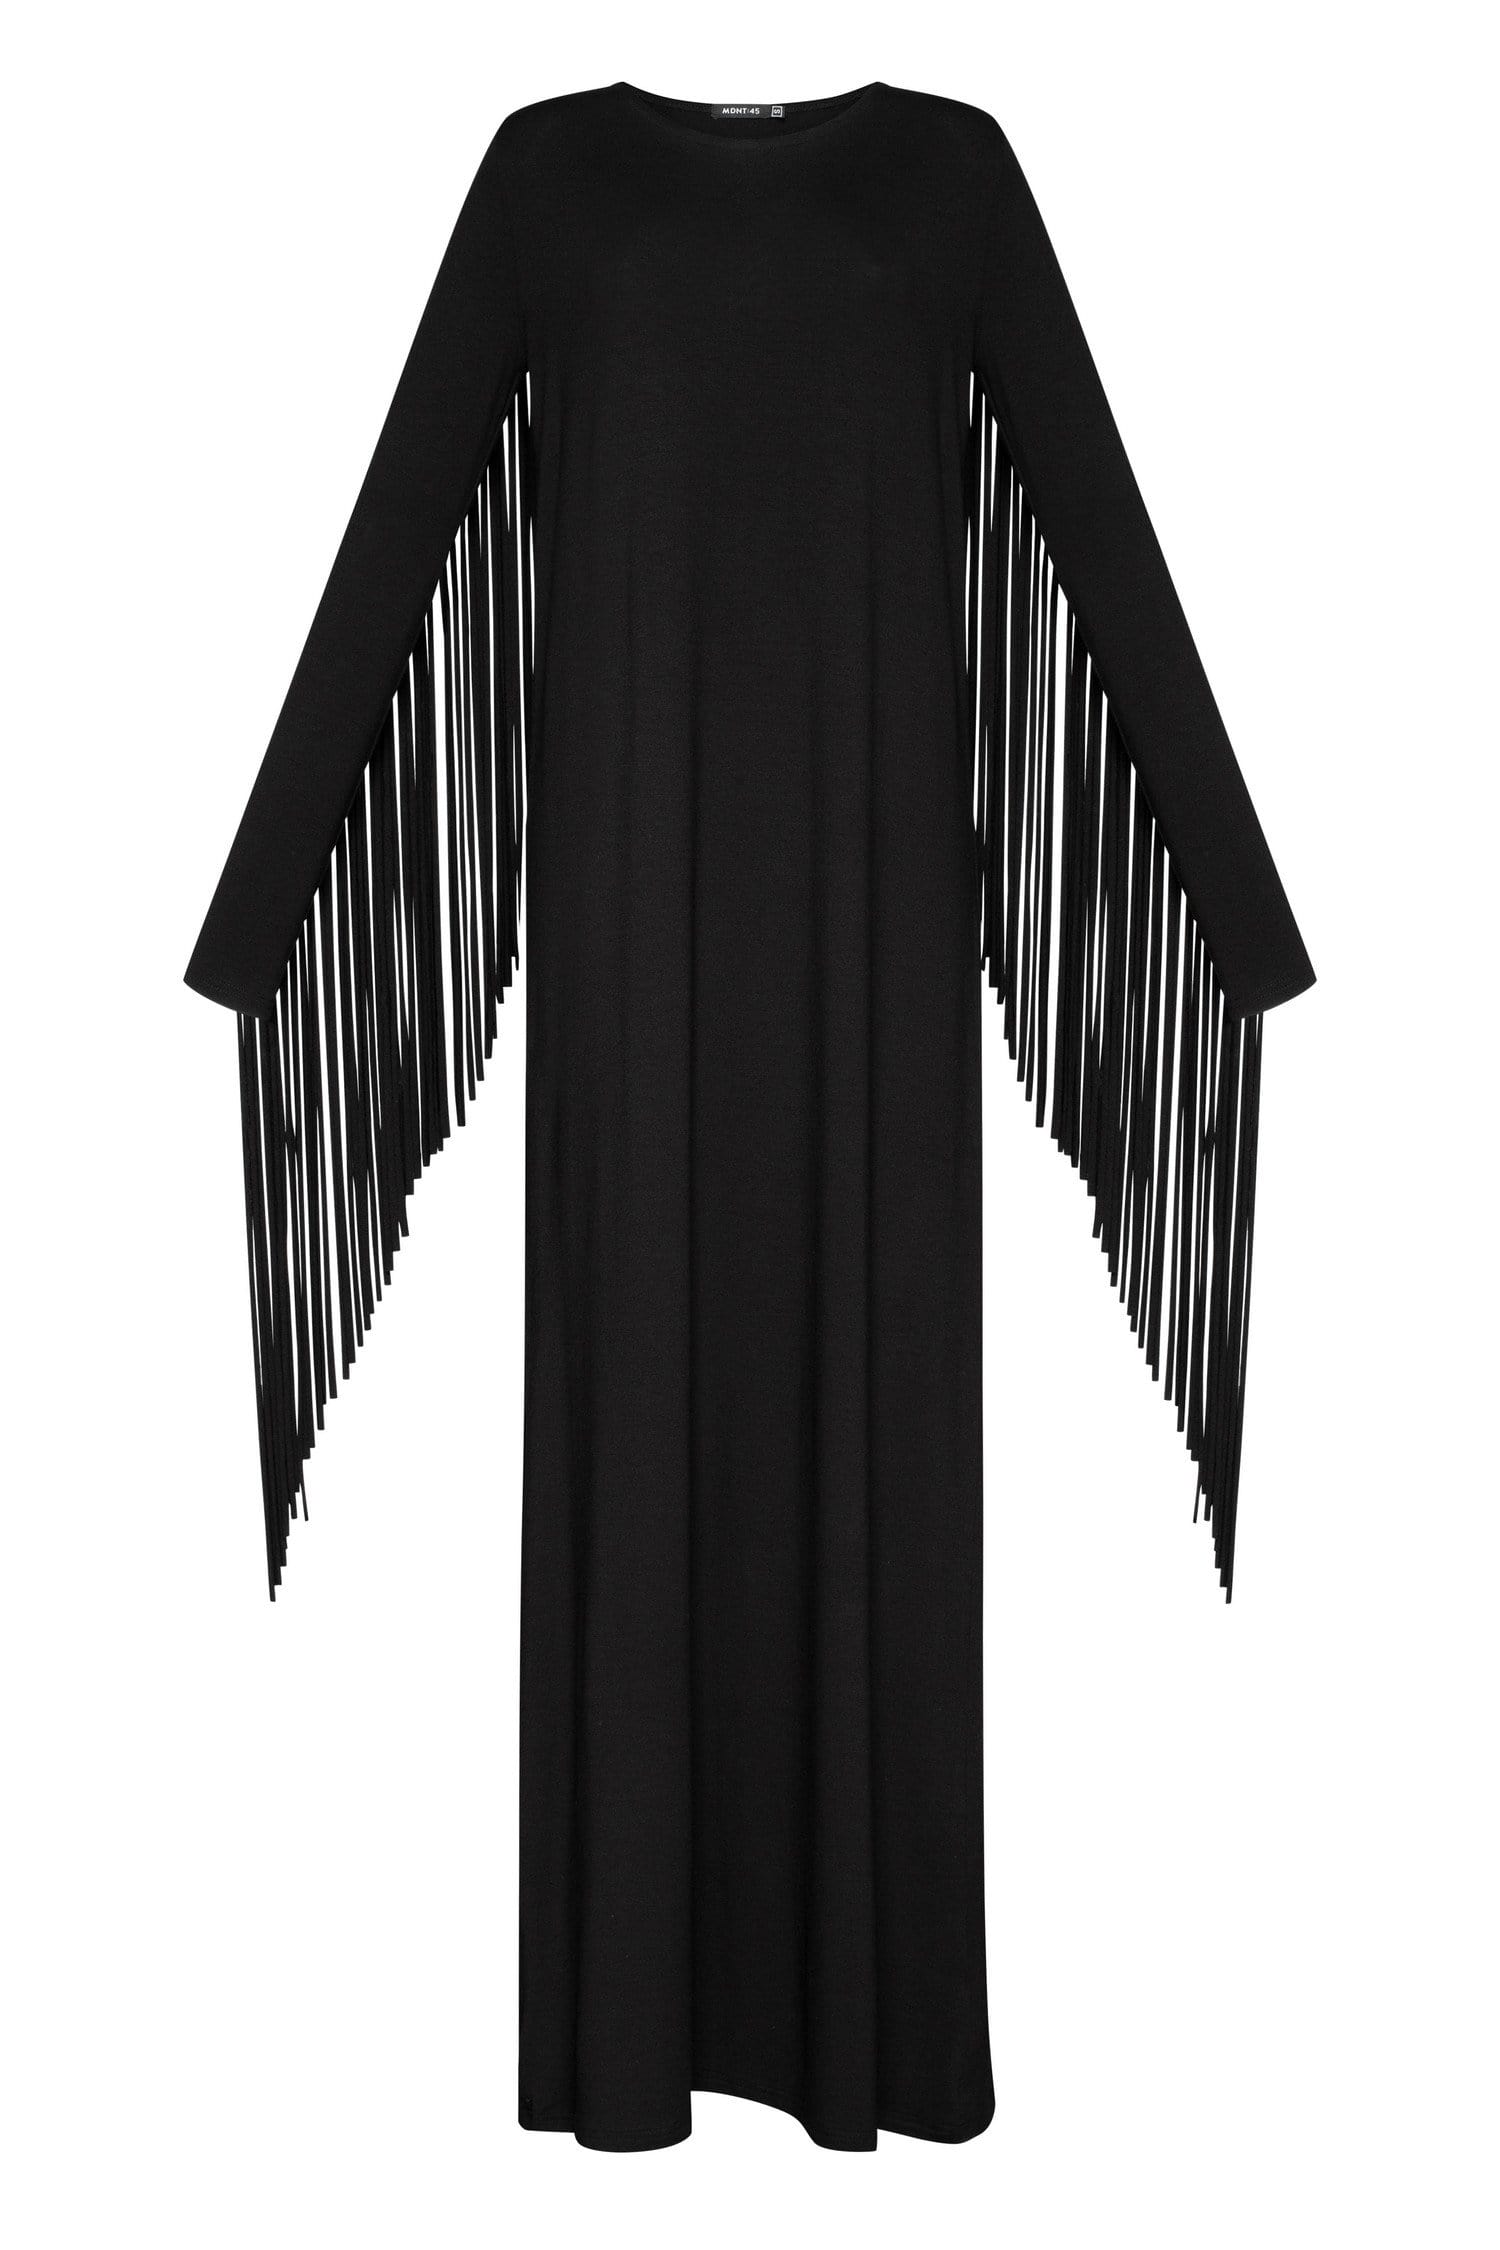 MDNT45 Dresses Black party dress